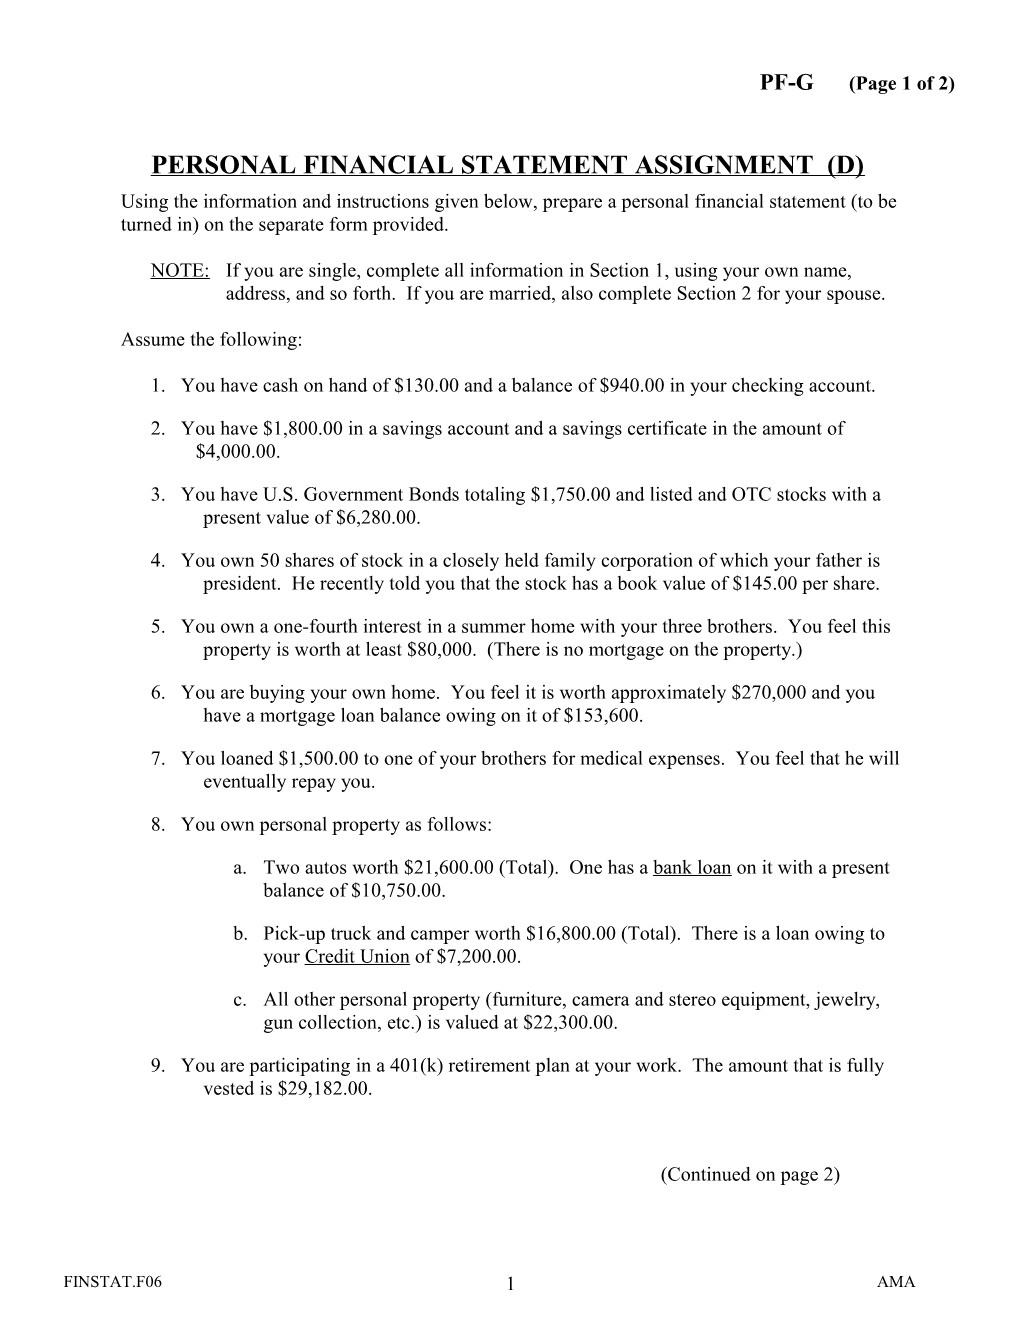 Personal Financial Statement Assignment (D)